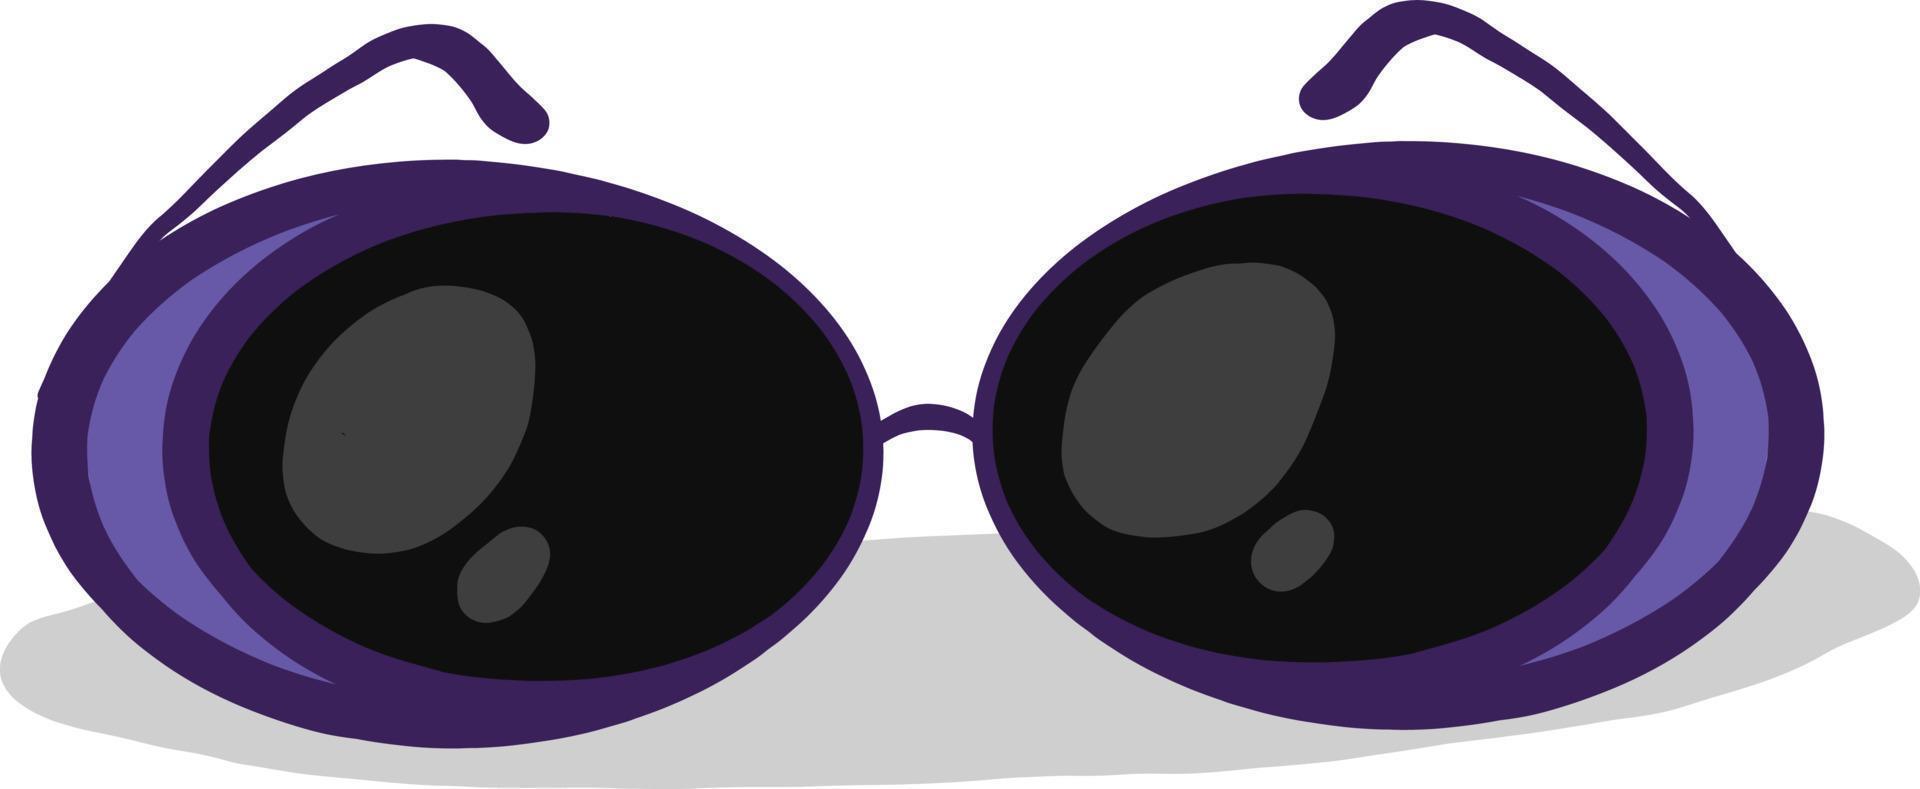 Cool violet sunglasses, illustration, vector on white background.